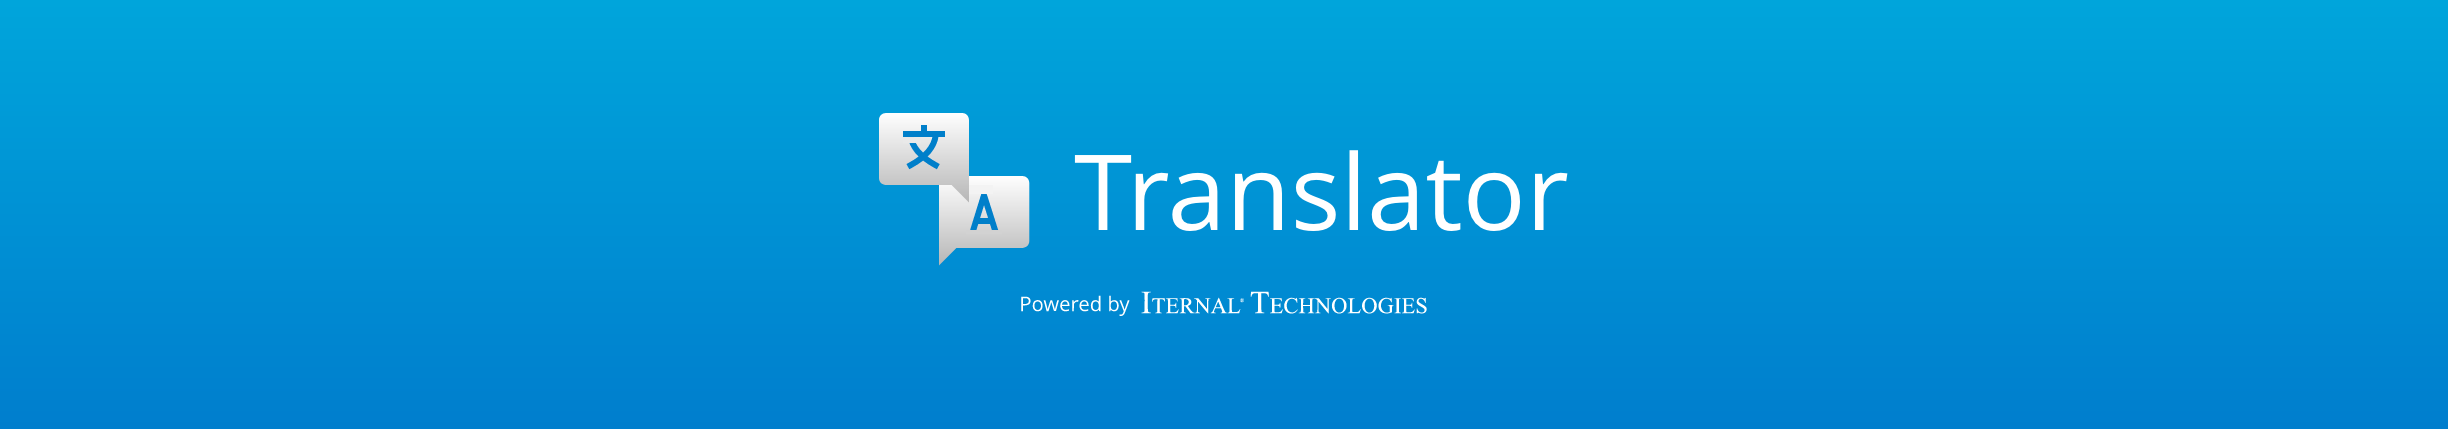 Iternal Technologies Translation App